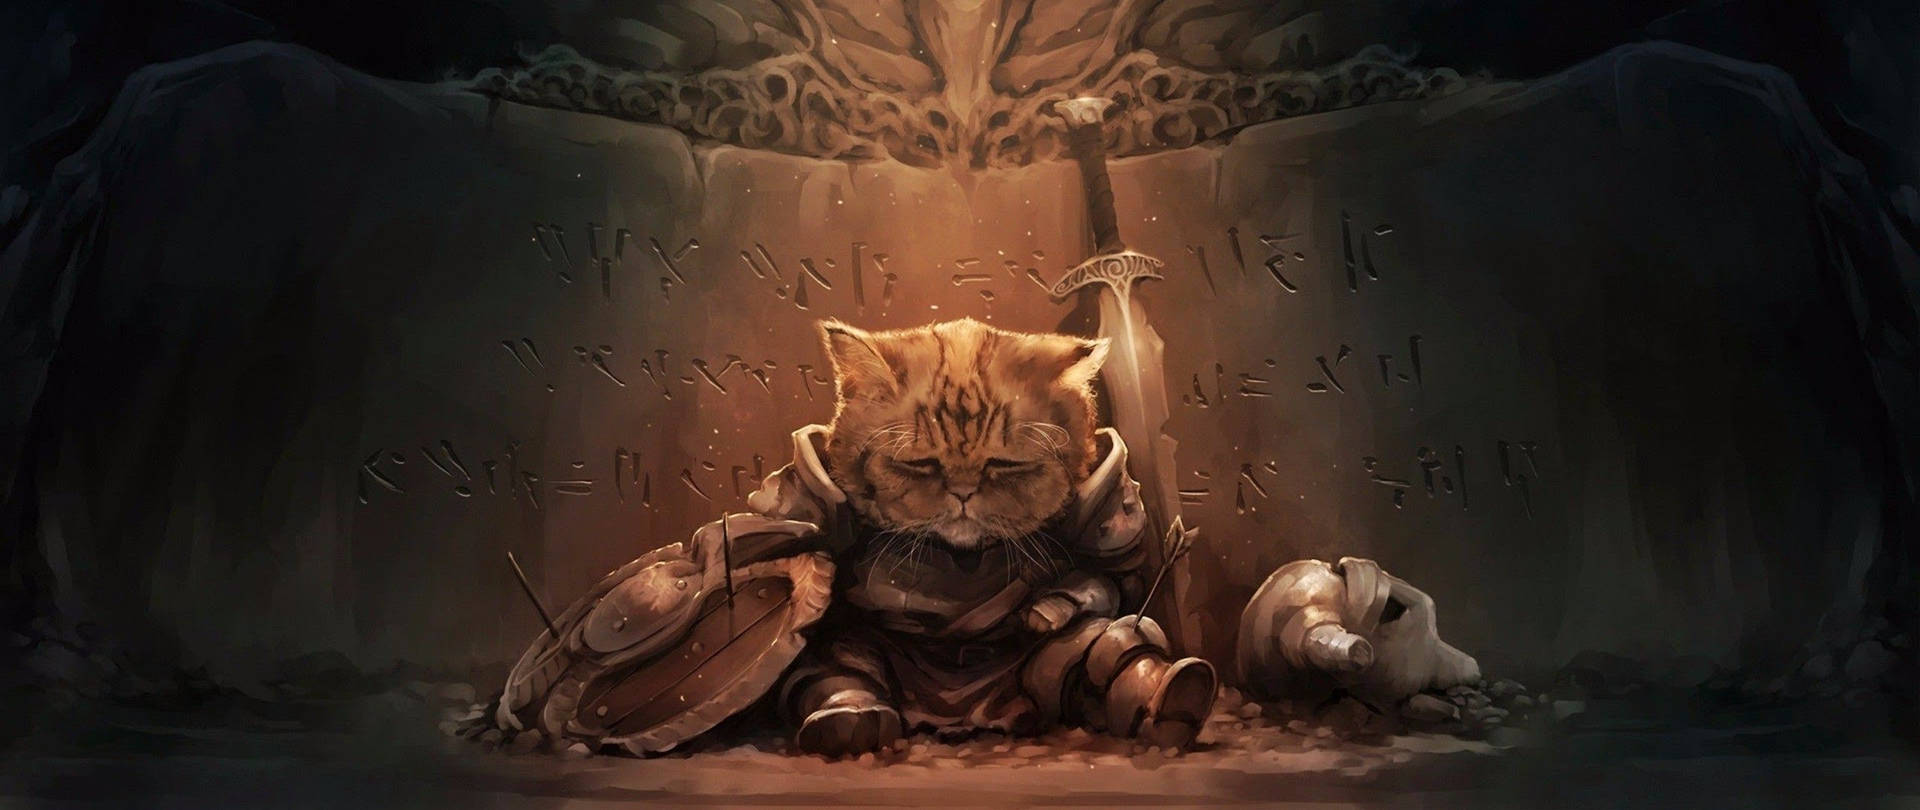 Cat Art Warrior With Shield Wallpaper